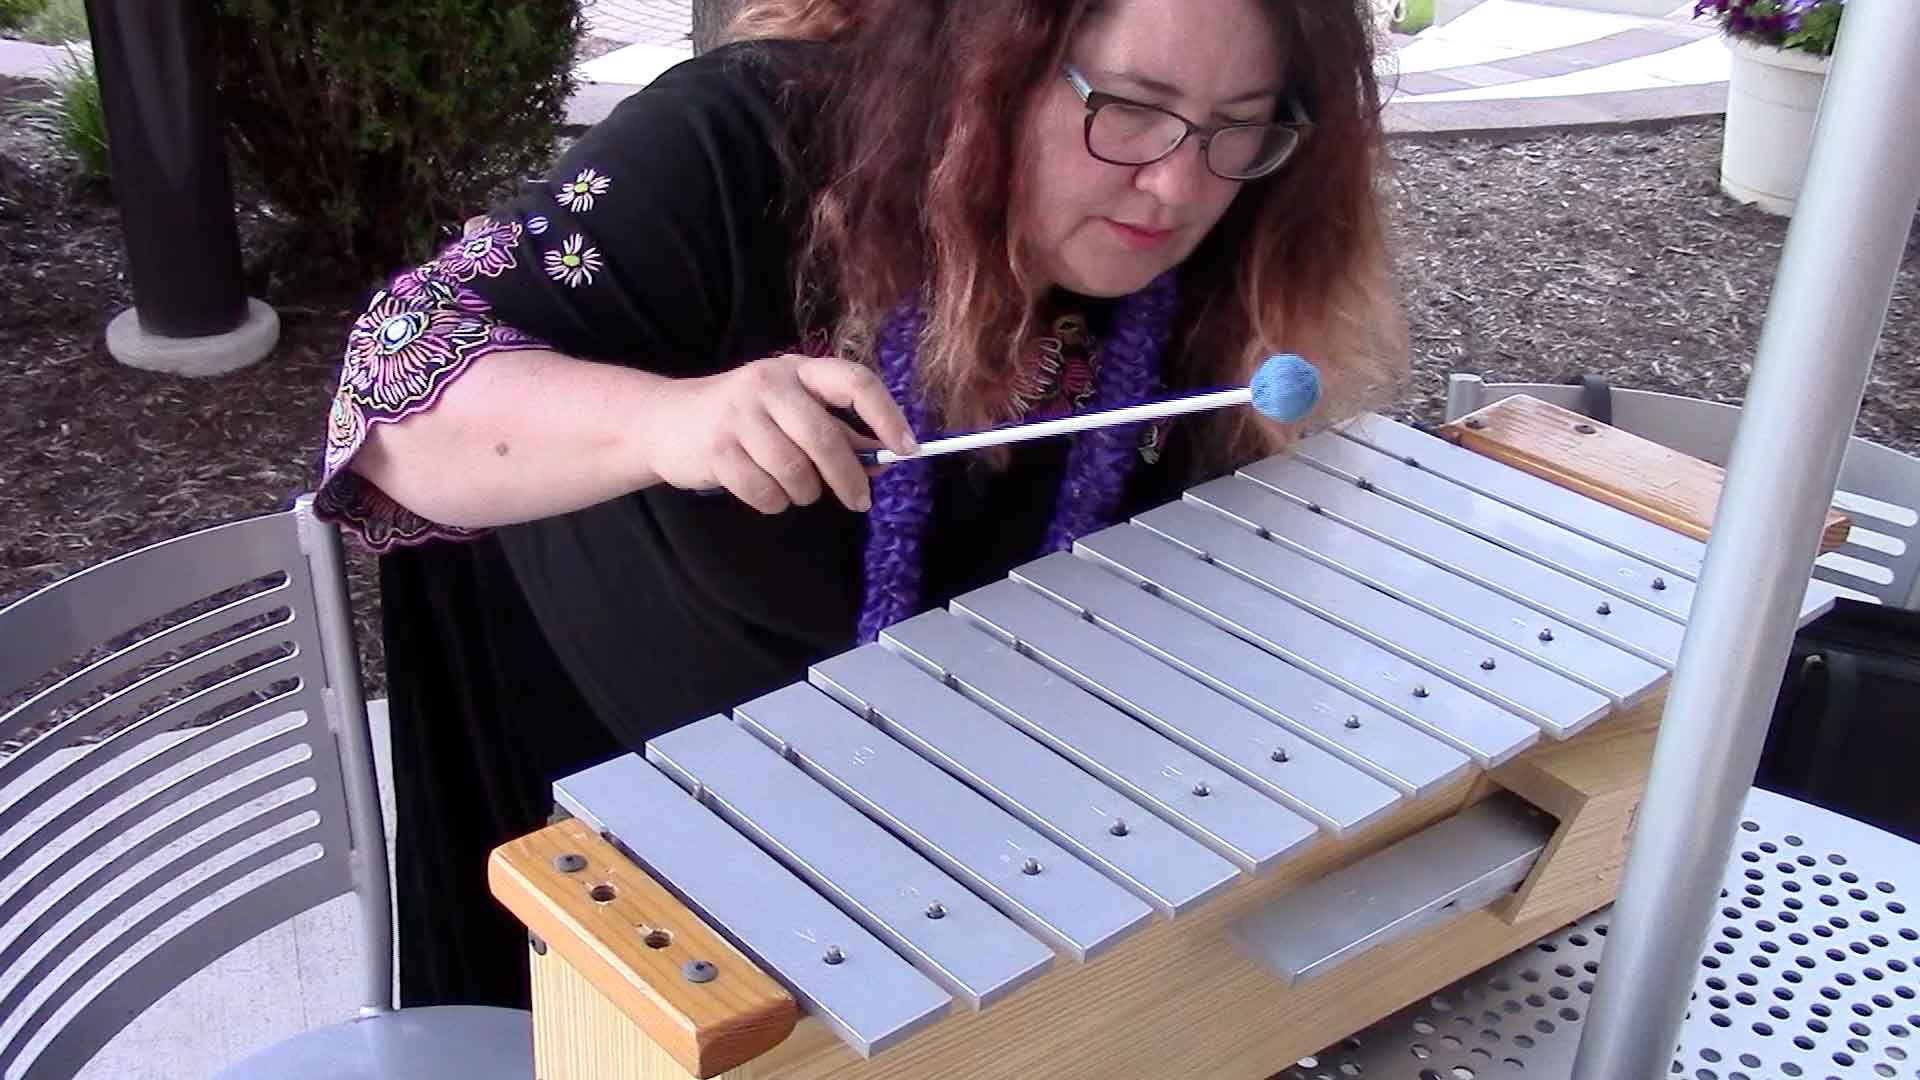 Melanie plays the xylophone